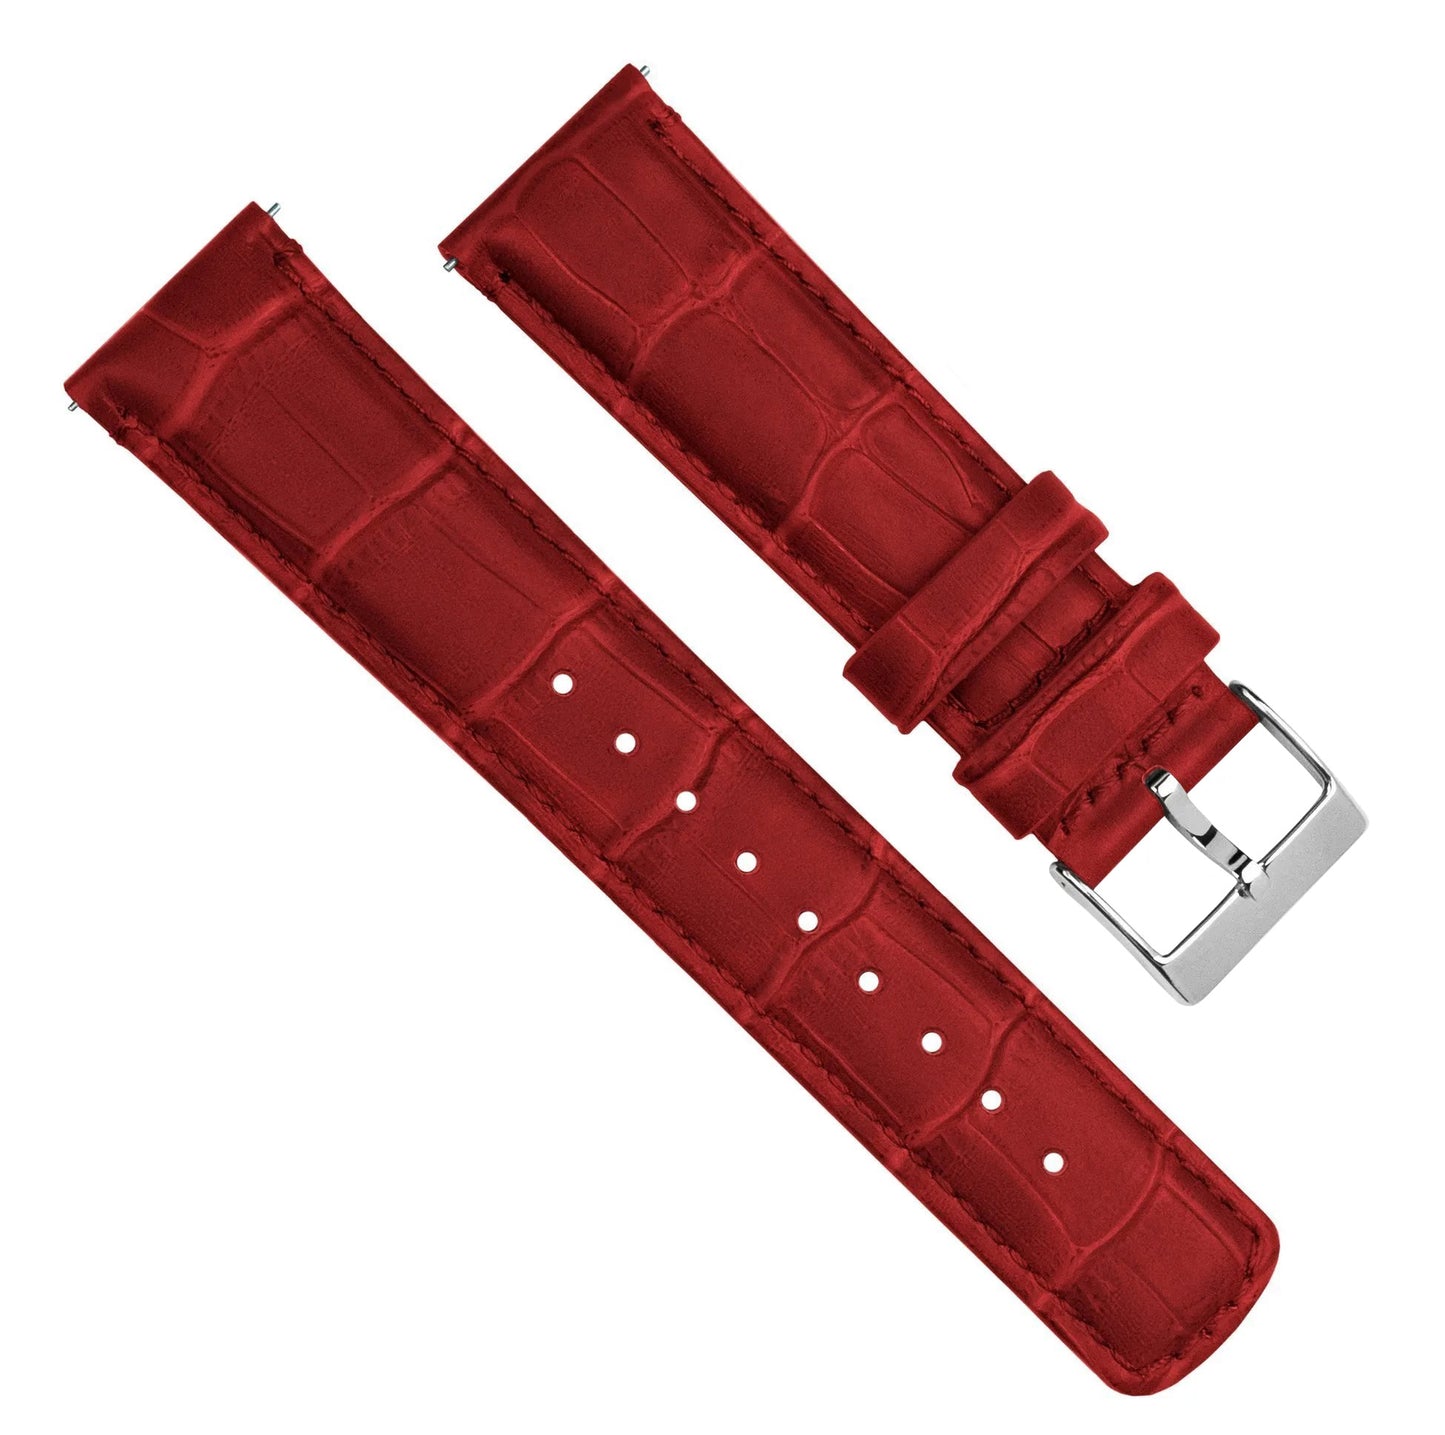 Timex Weekender Expedition Watches Crimson Red Alligator Grain Leather Watch Band